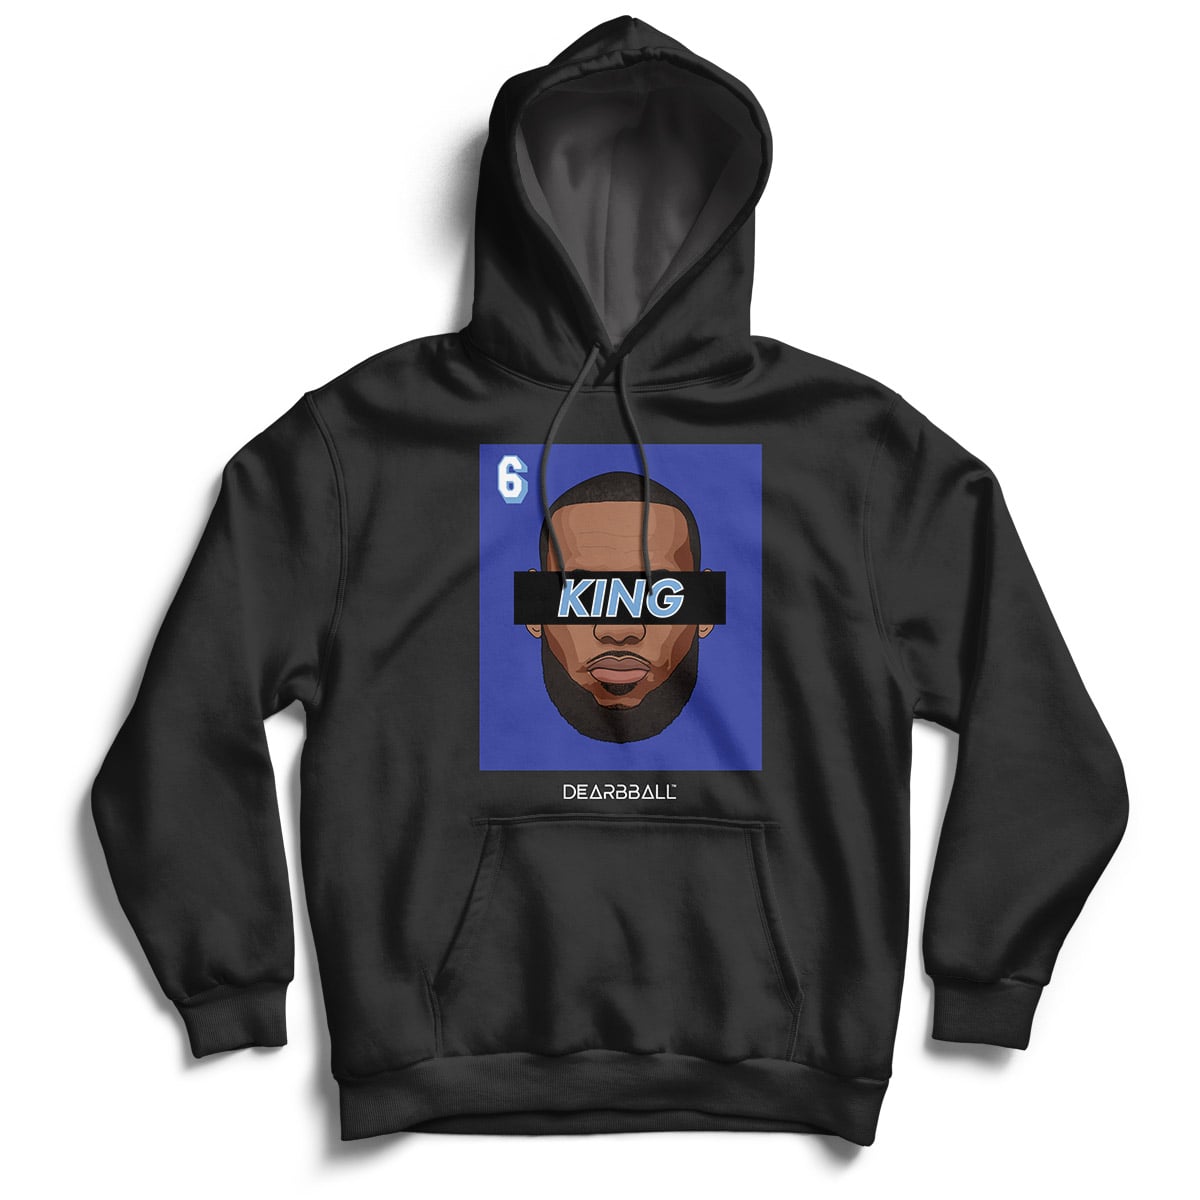 [CHILDREN] DearBBall Hooded Sweatshirt - KING 6 Blue Edition